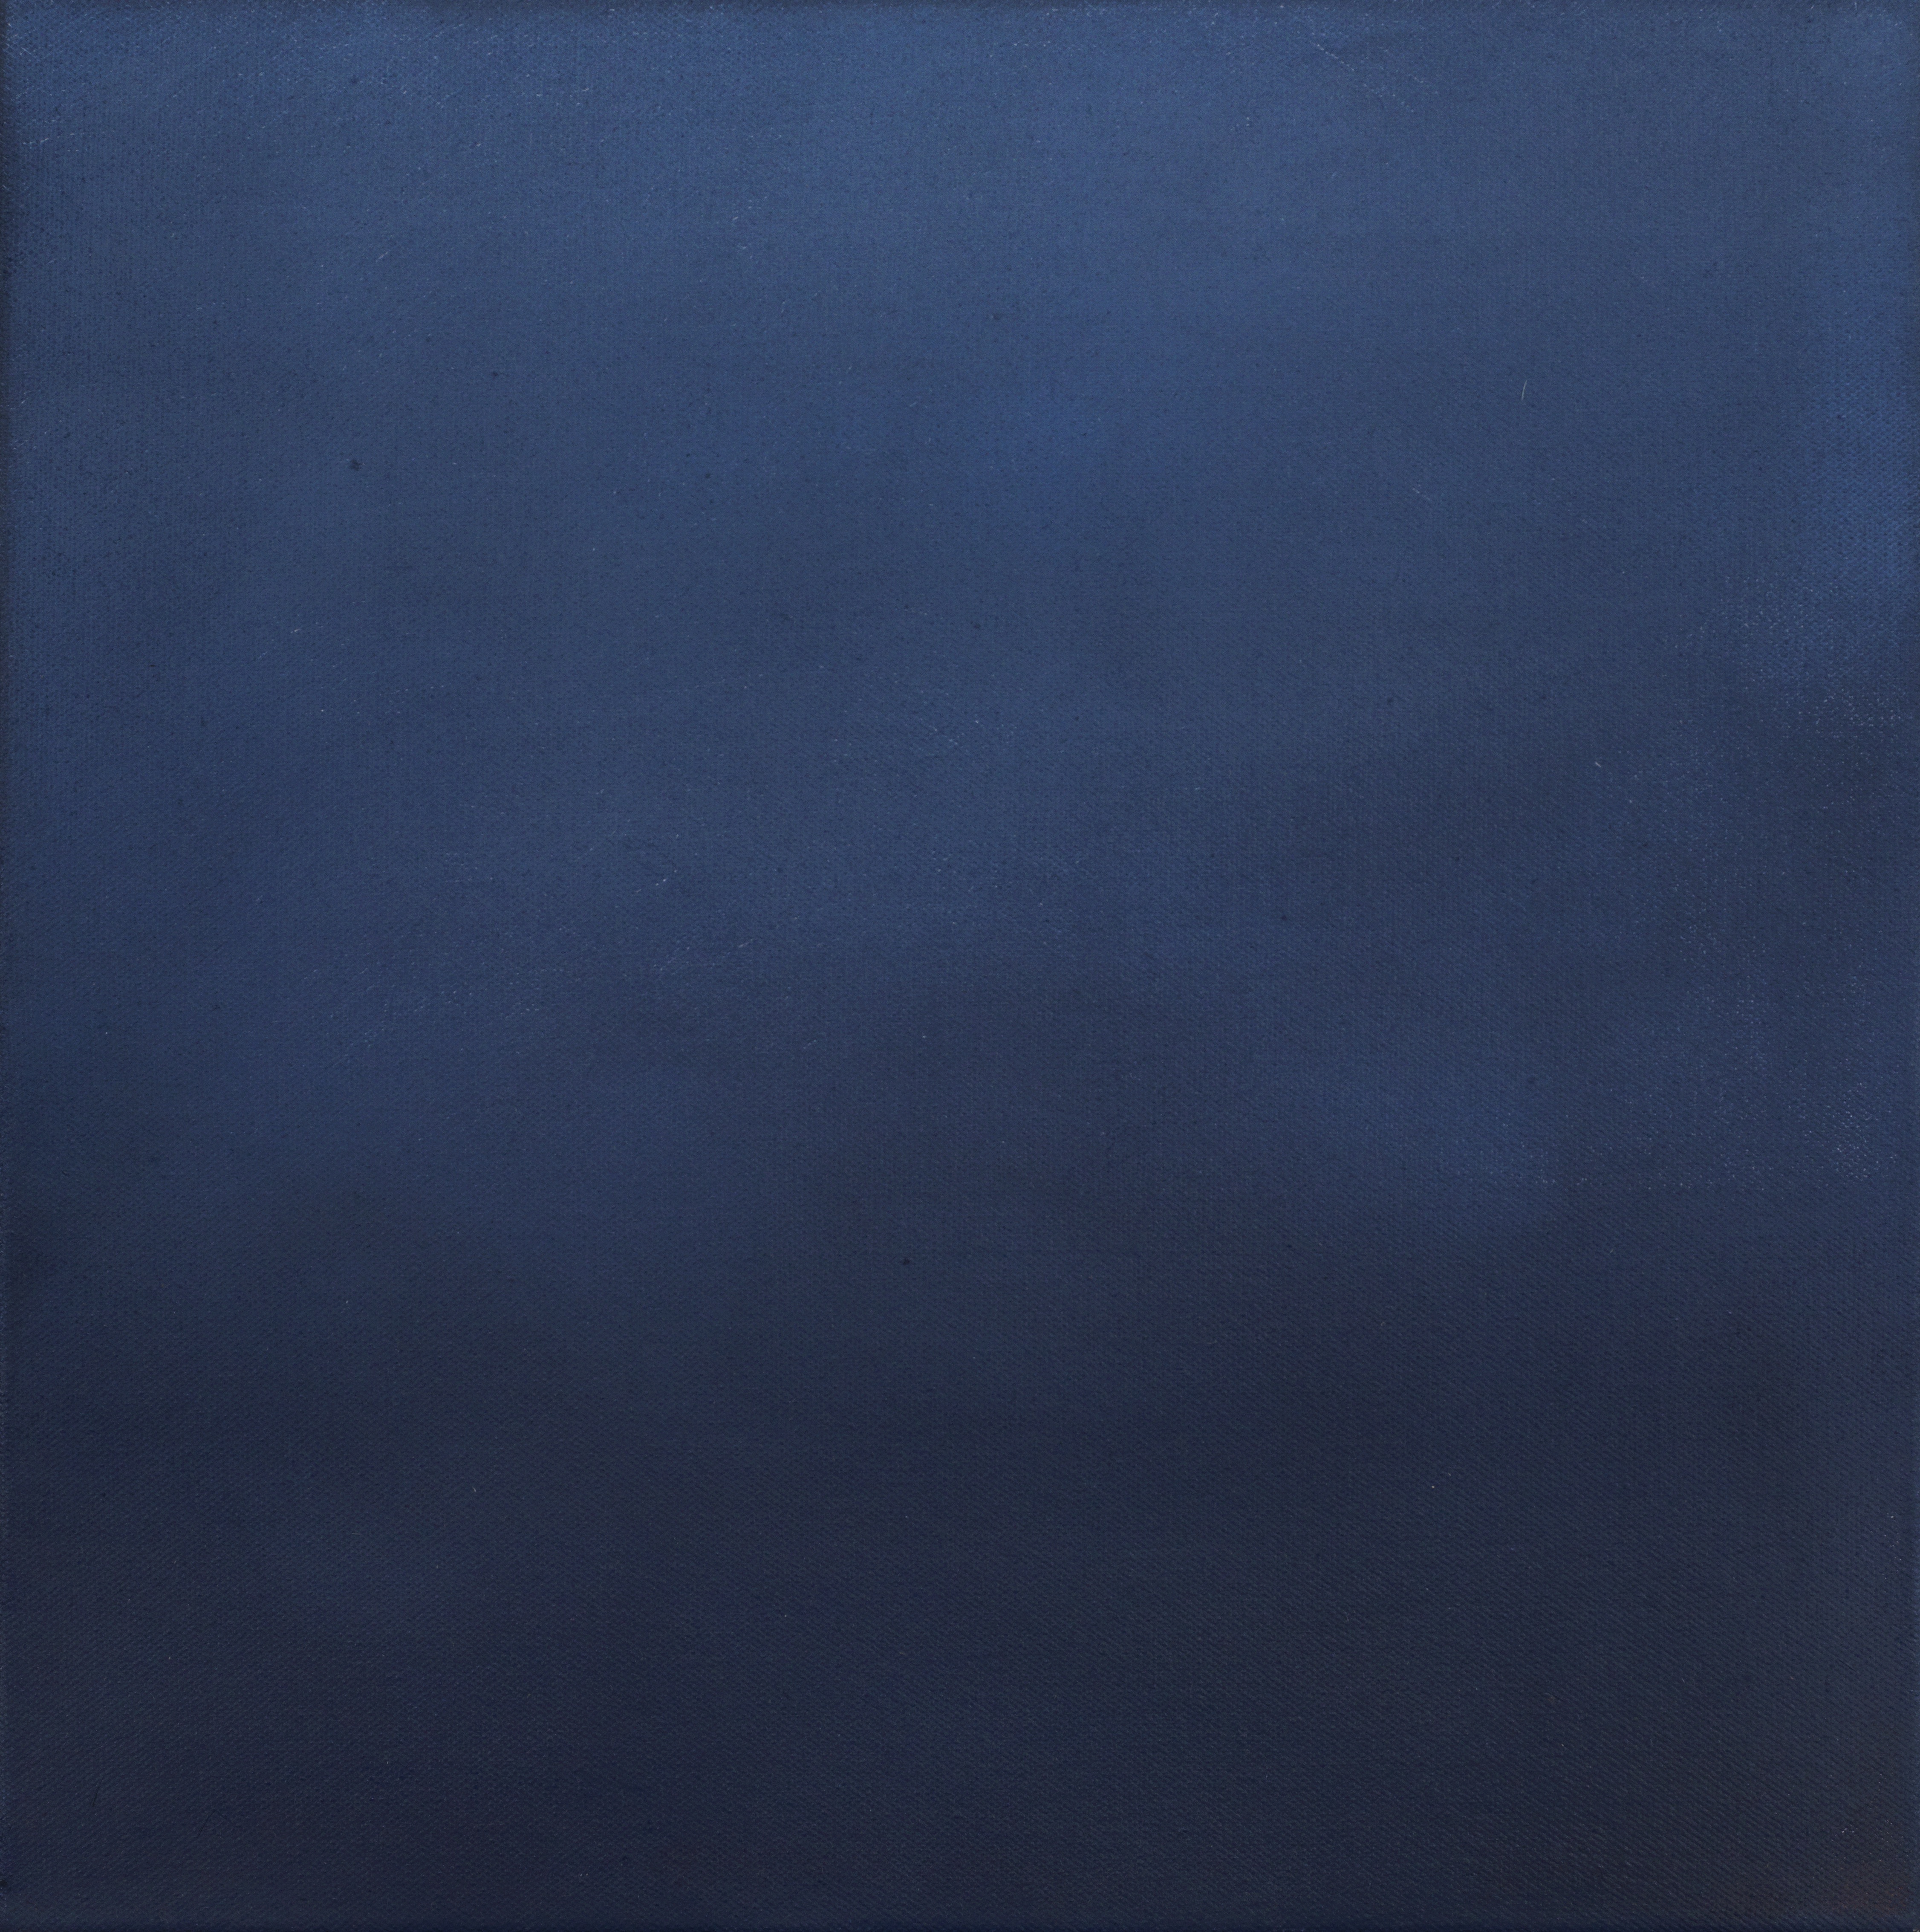 Angela Lyn, small blue place, 2019
Oil on canvas
32 x 32 cm